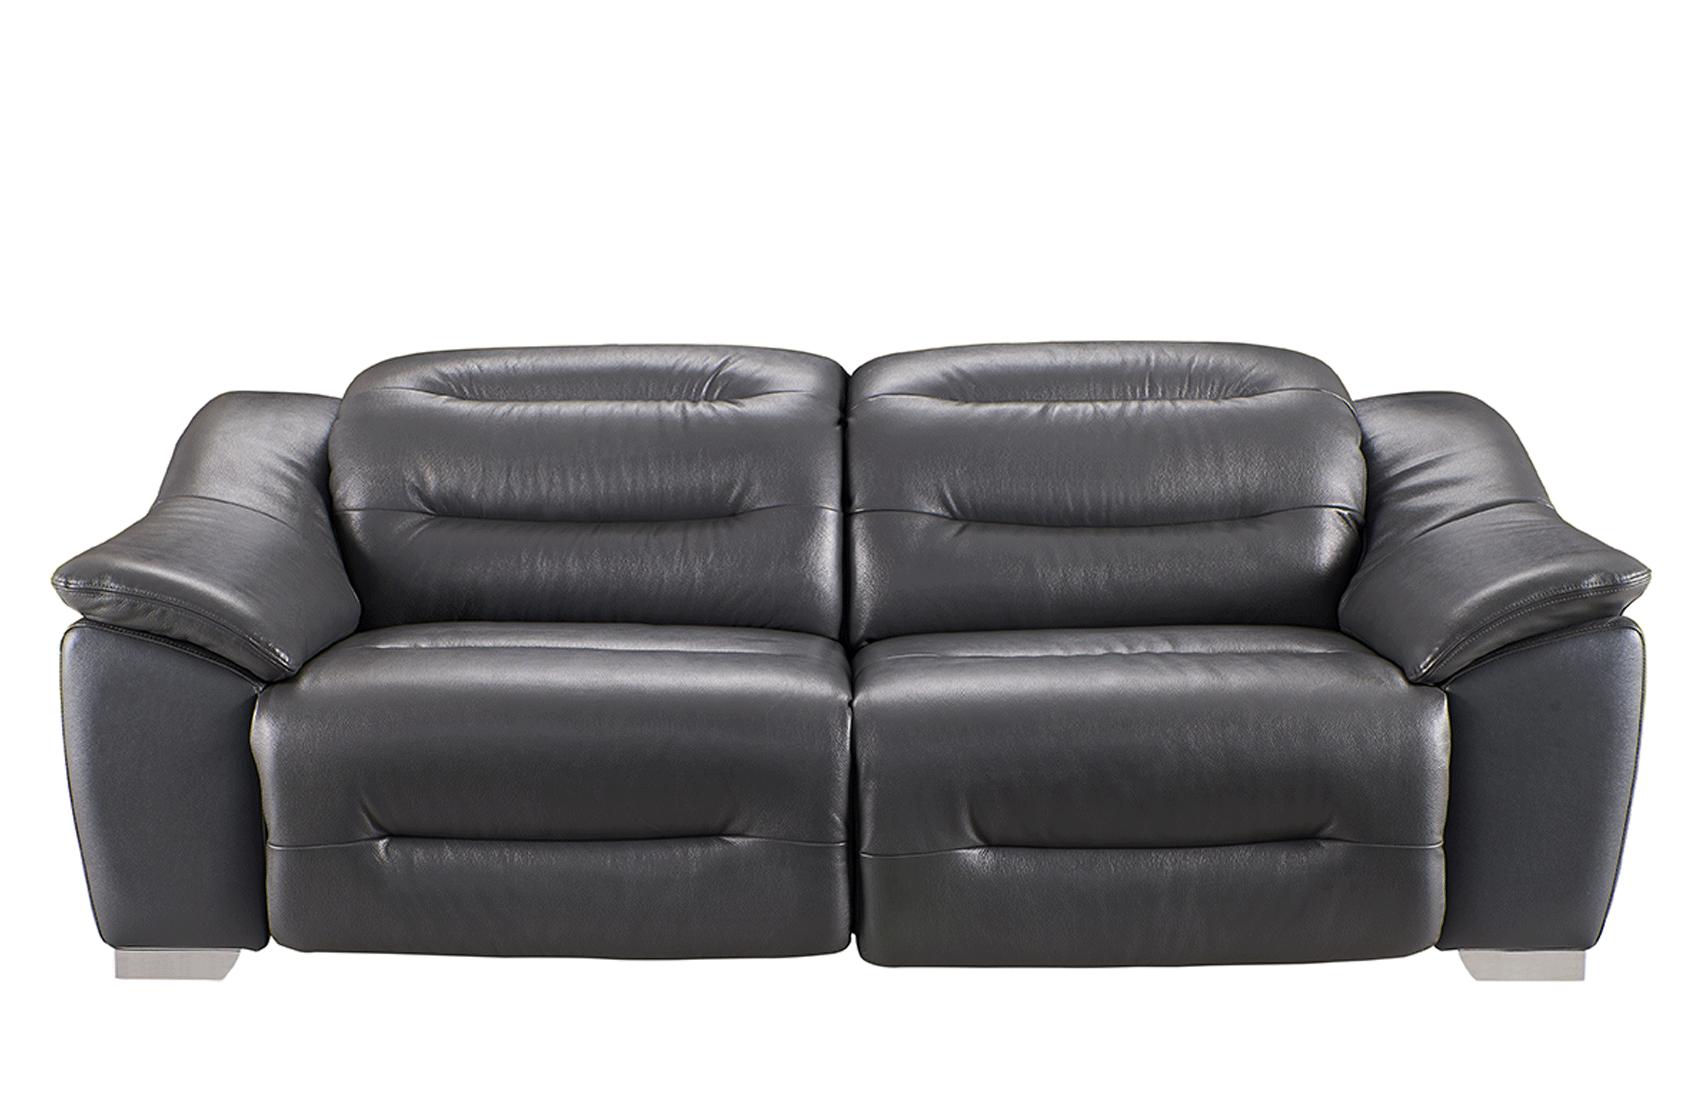 Contemporary, Modern Reclining Sofa 972 ESF-972-Sofa in Dark Gray Top-grain Leather